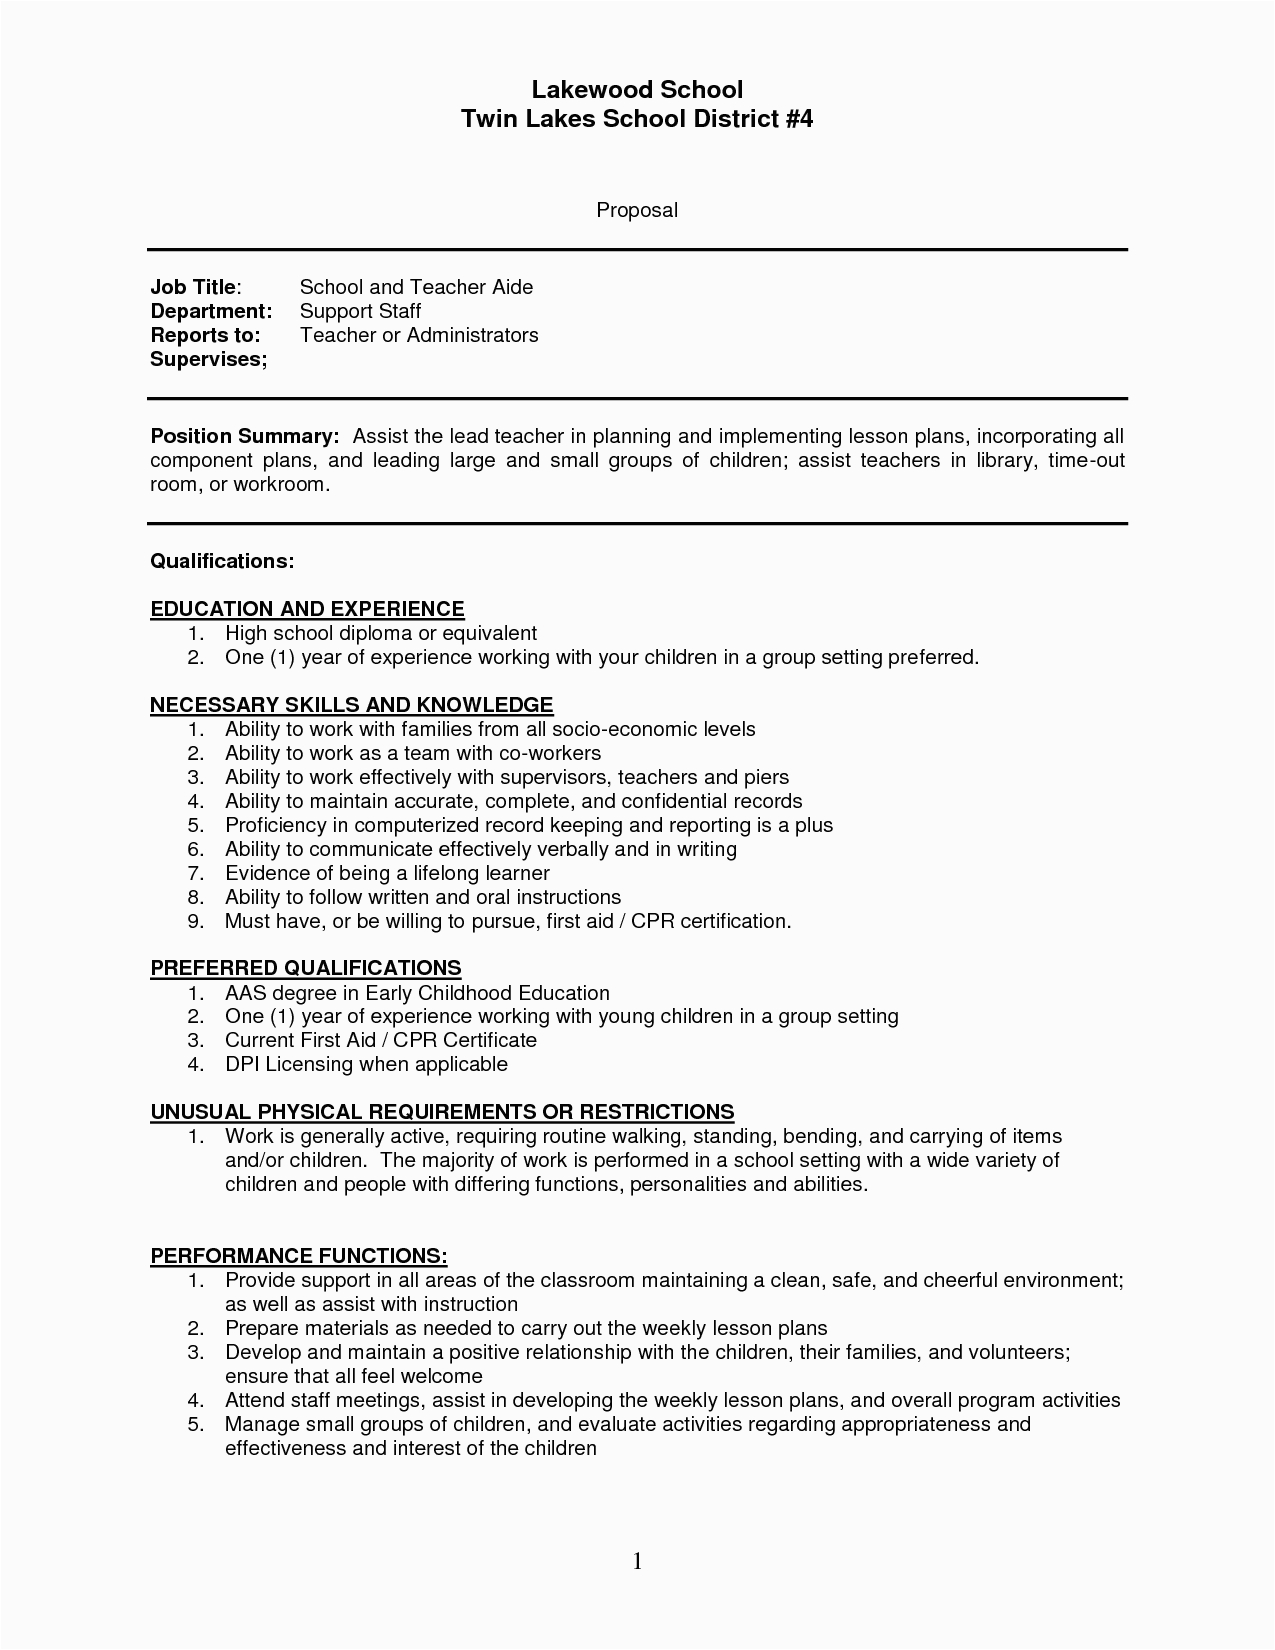 Sample Resume Objectives for Teachers Aide Teacher assistant Sample Resume Sample Resume Of Teachers